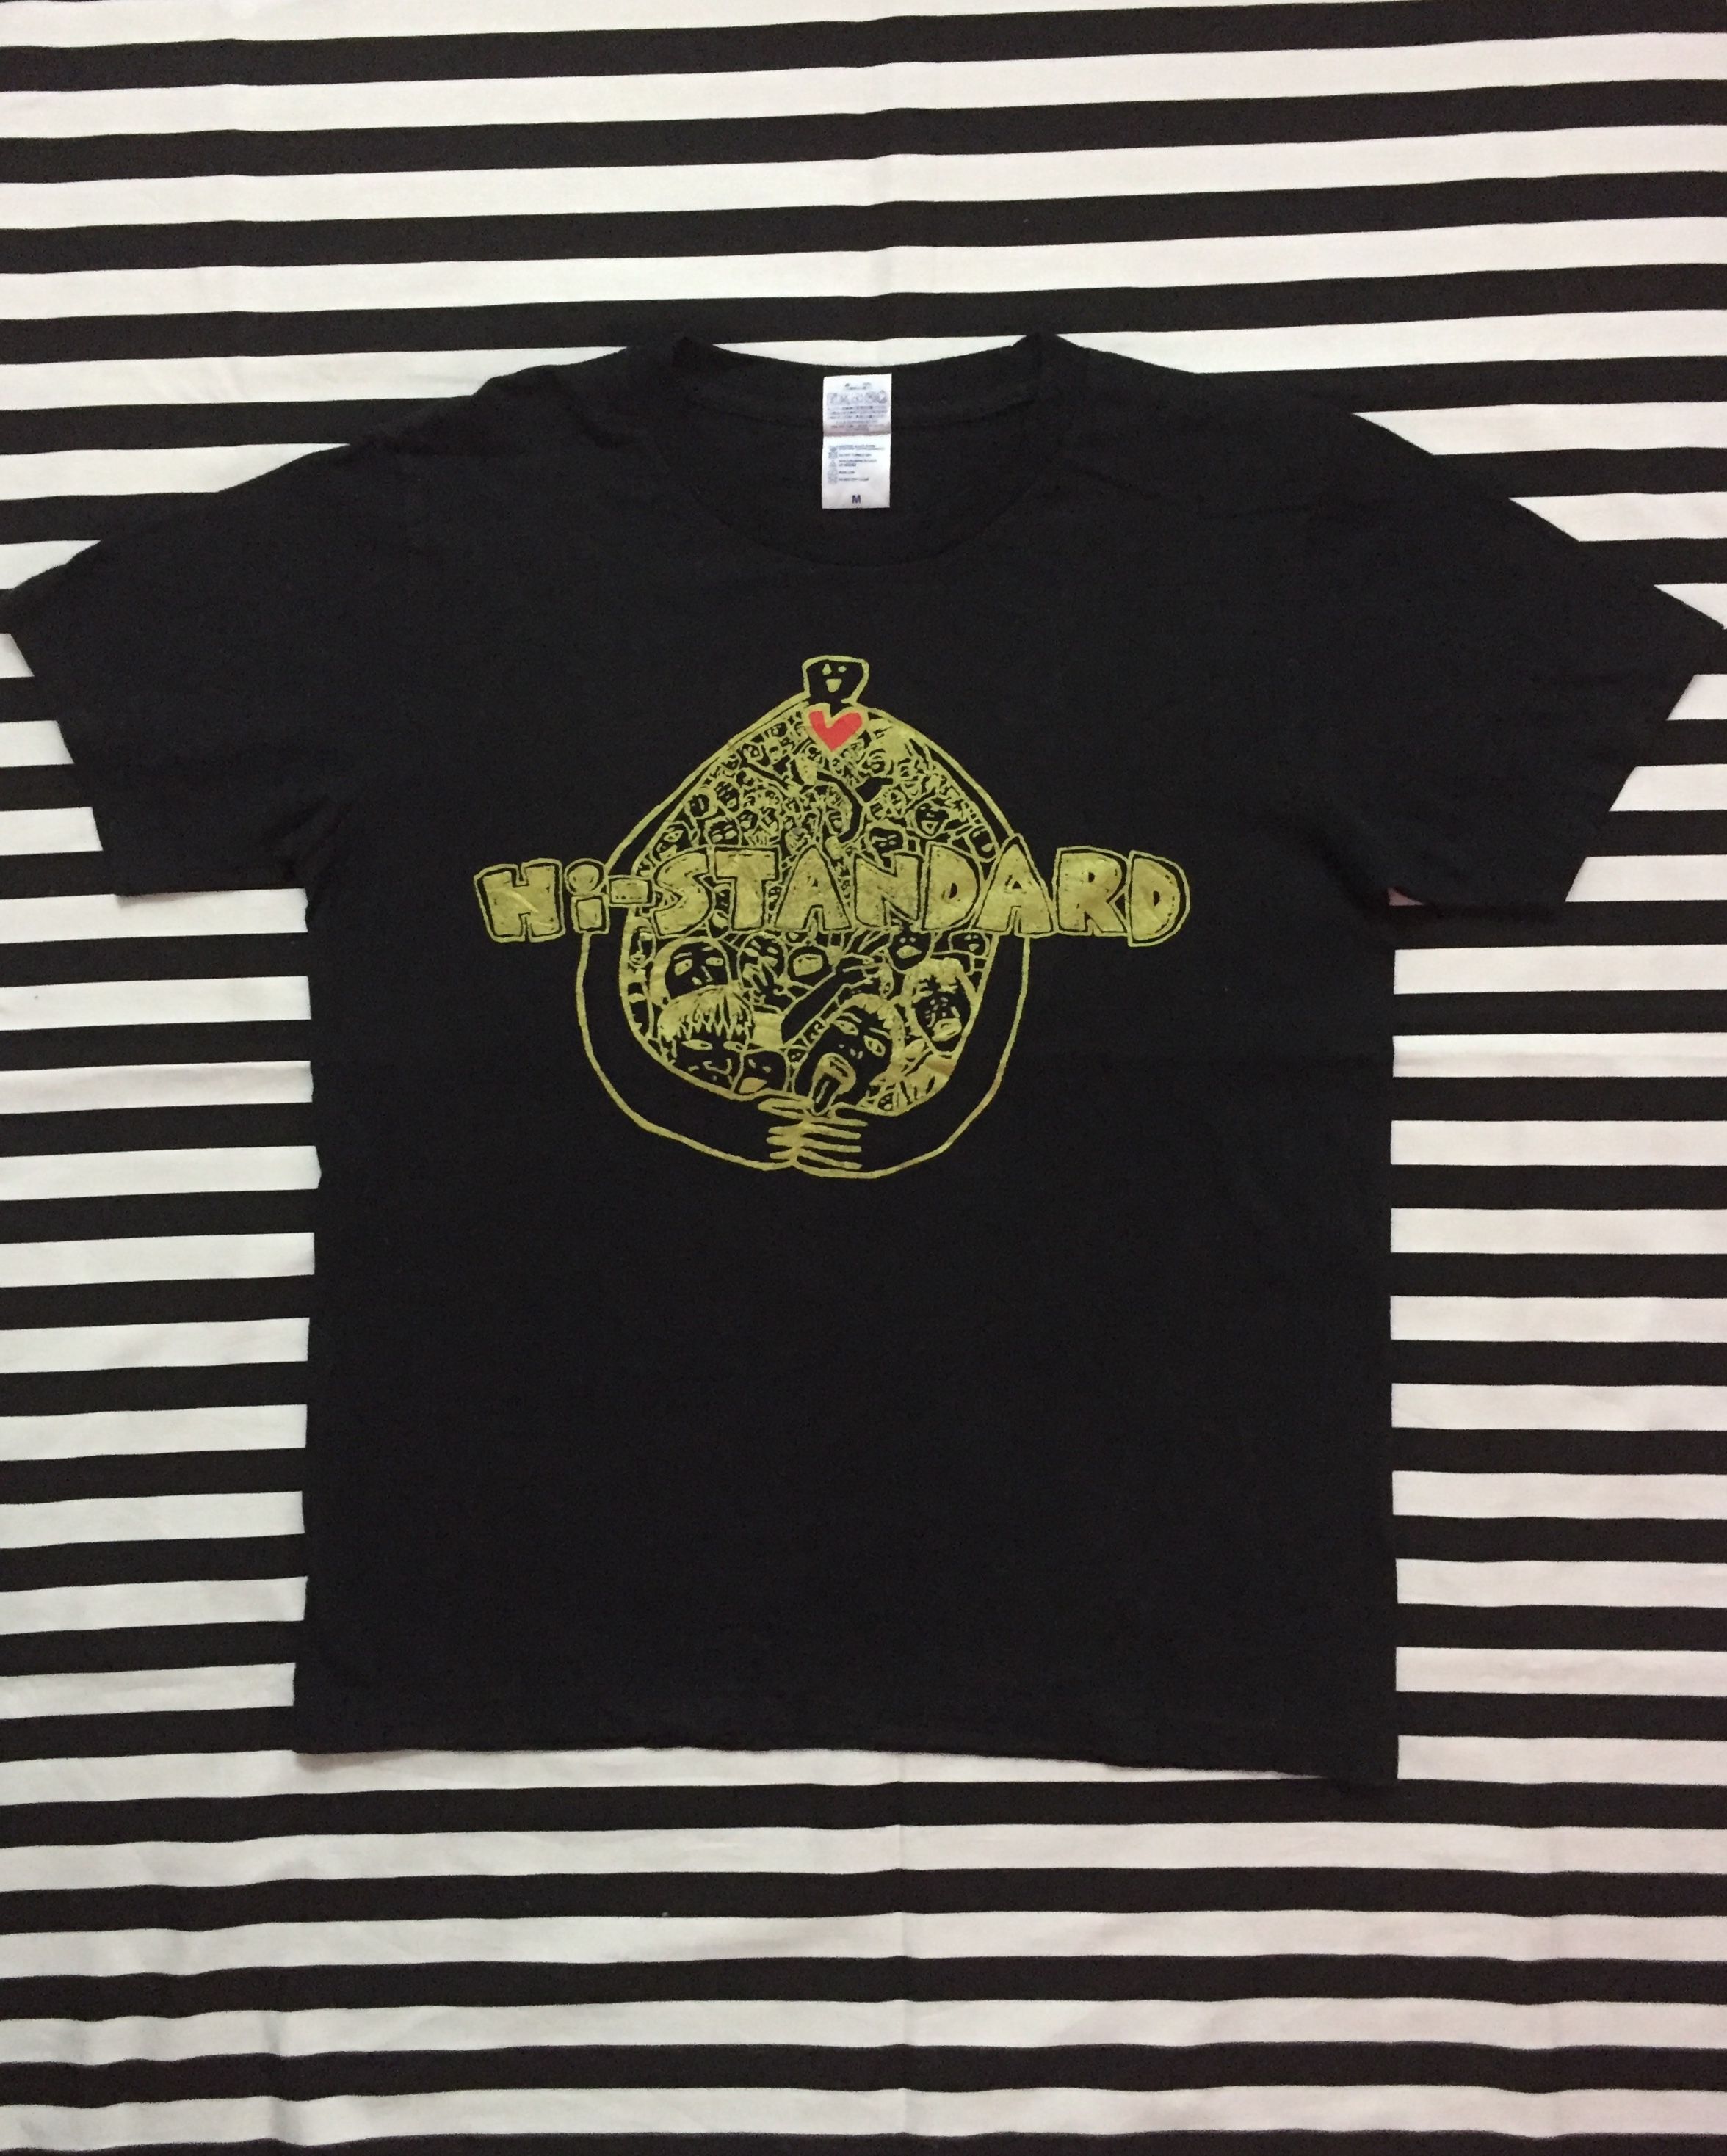 Japanese Brand Hi-Standard Japanese Band T-shirt Size US M / EU 48-50 / 2 - 1 Preview